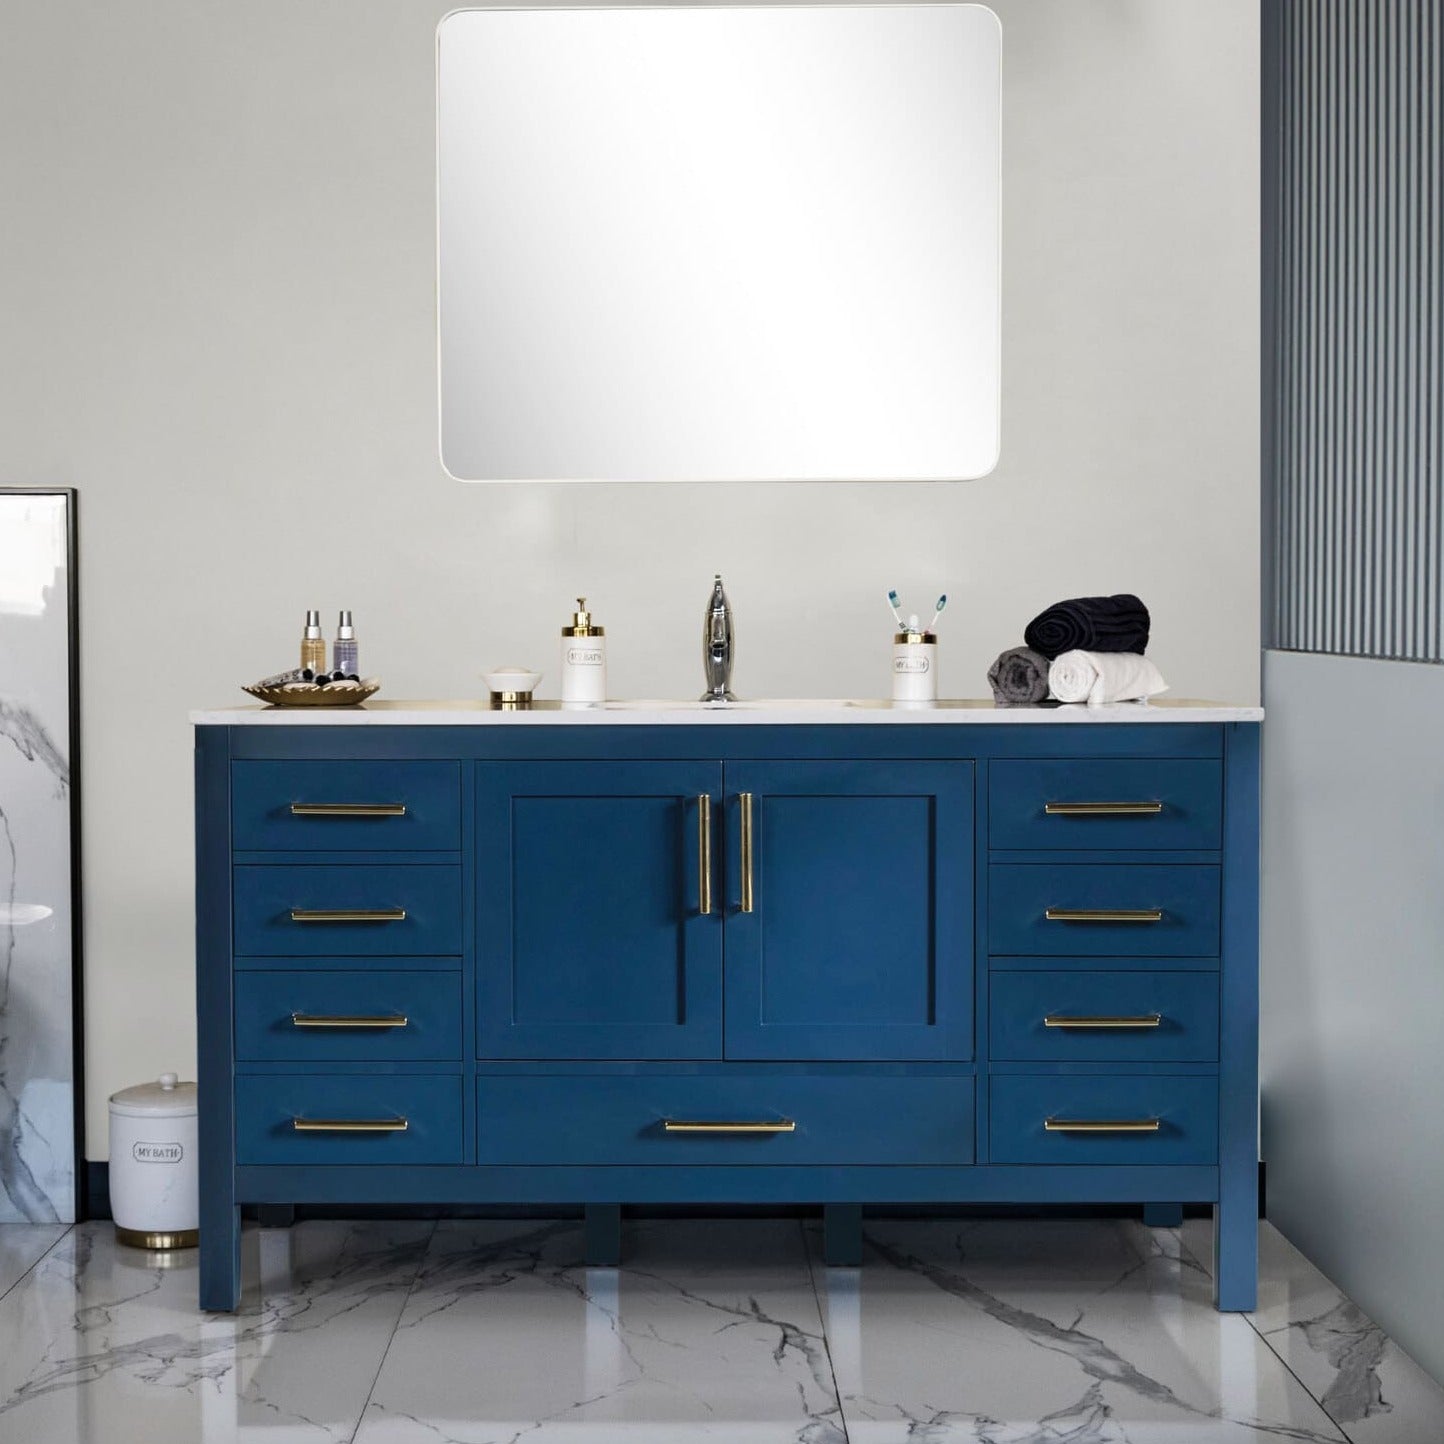 Ahley Bathroom Vanity Homelero 60"  #size_60"  #color_blue  #hardware_brass